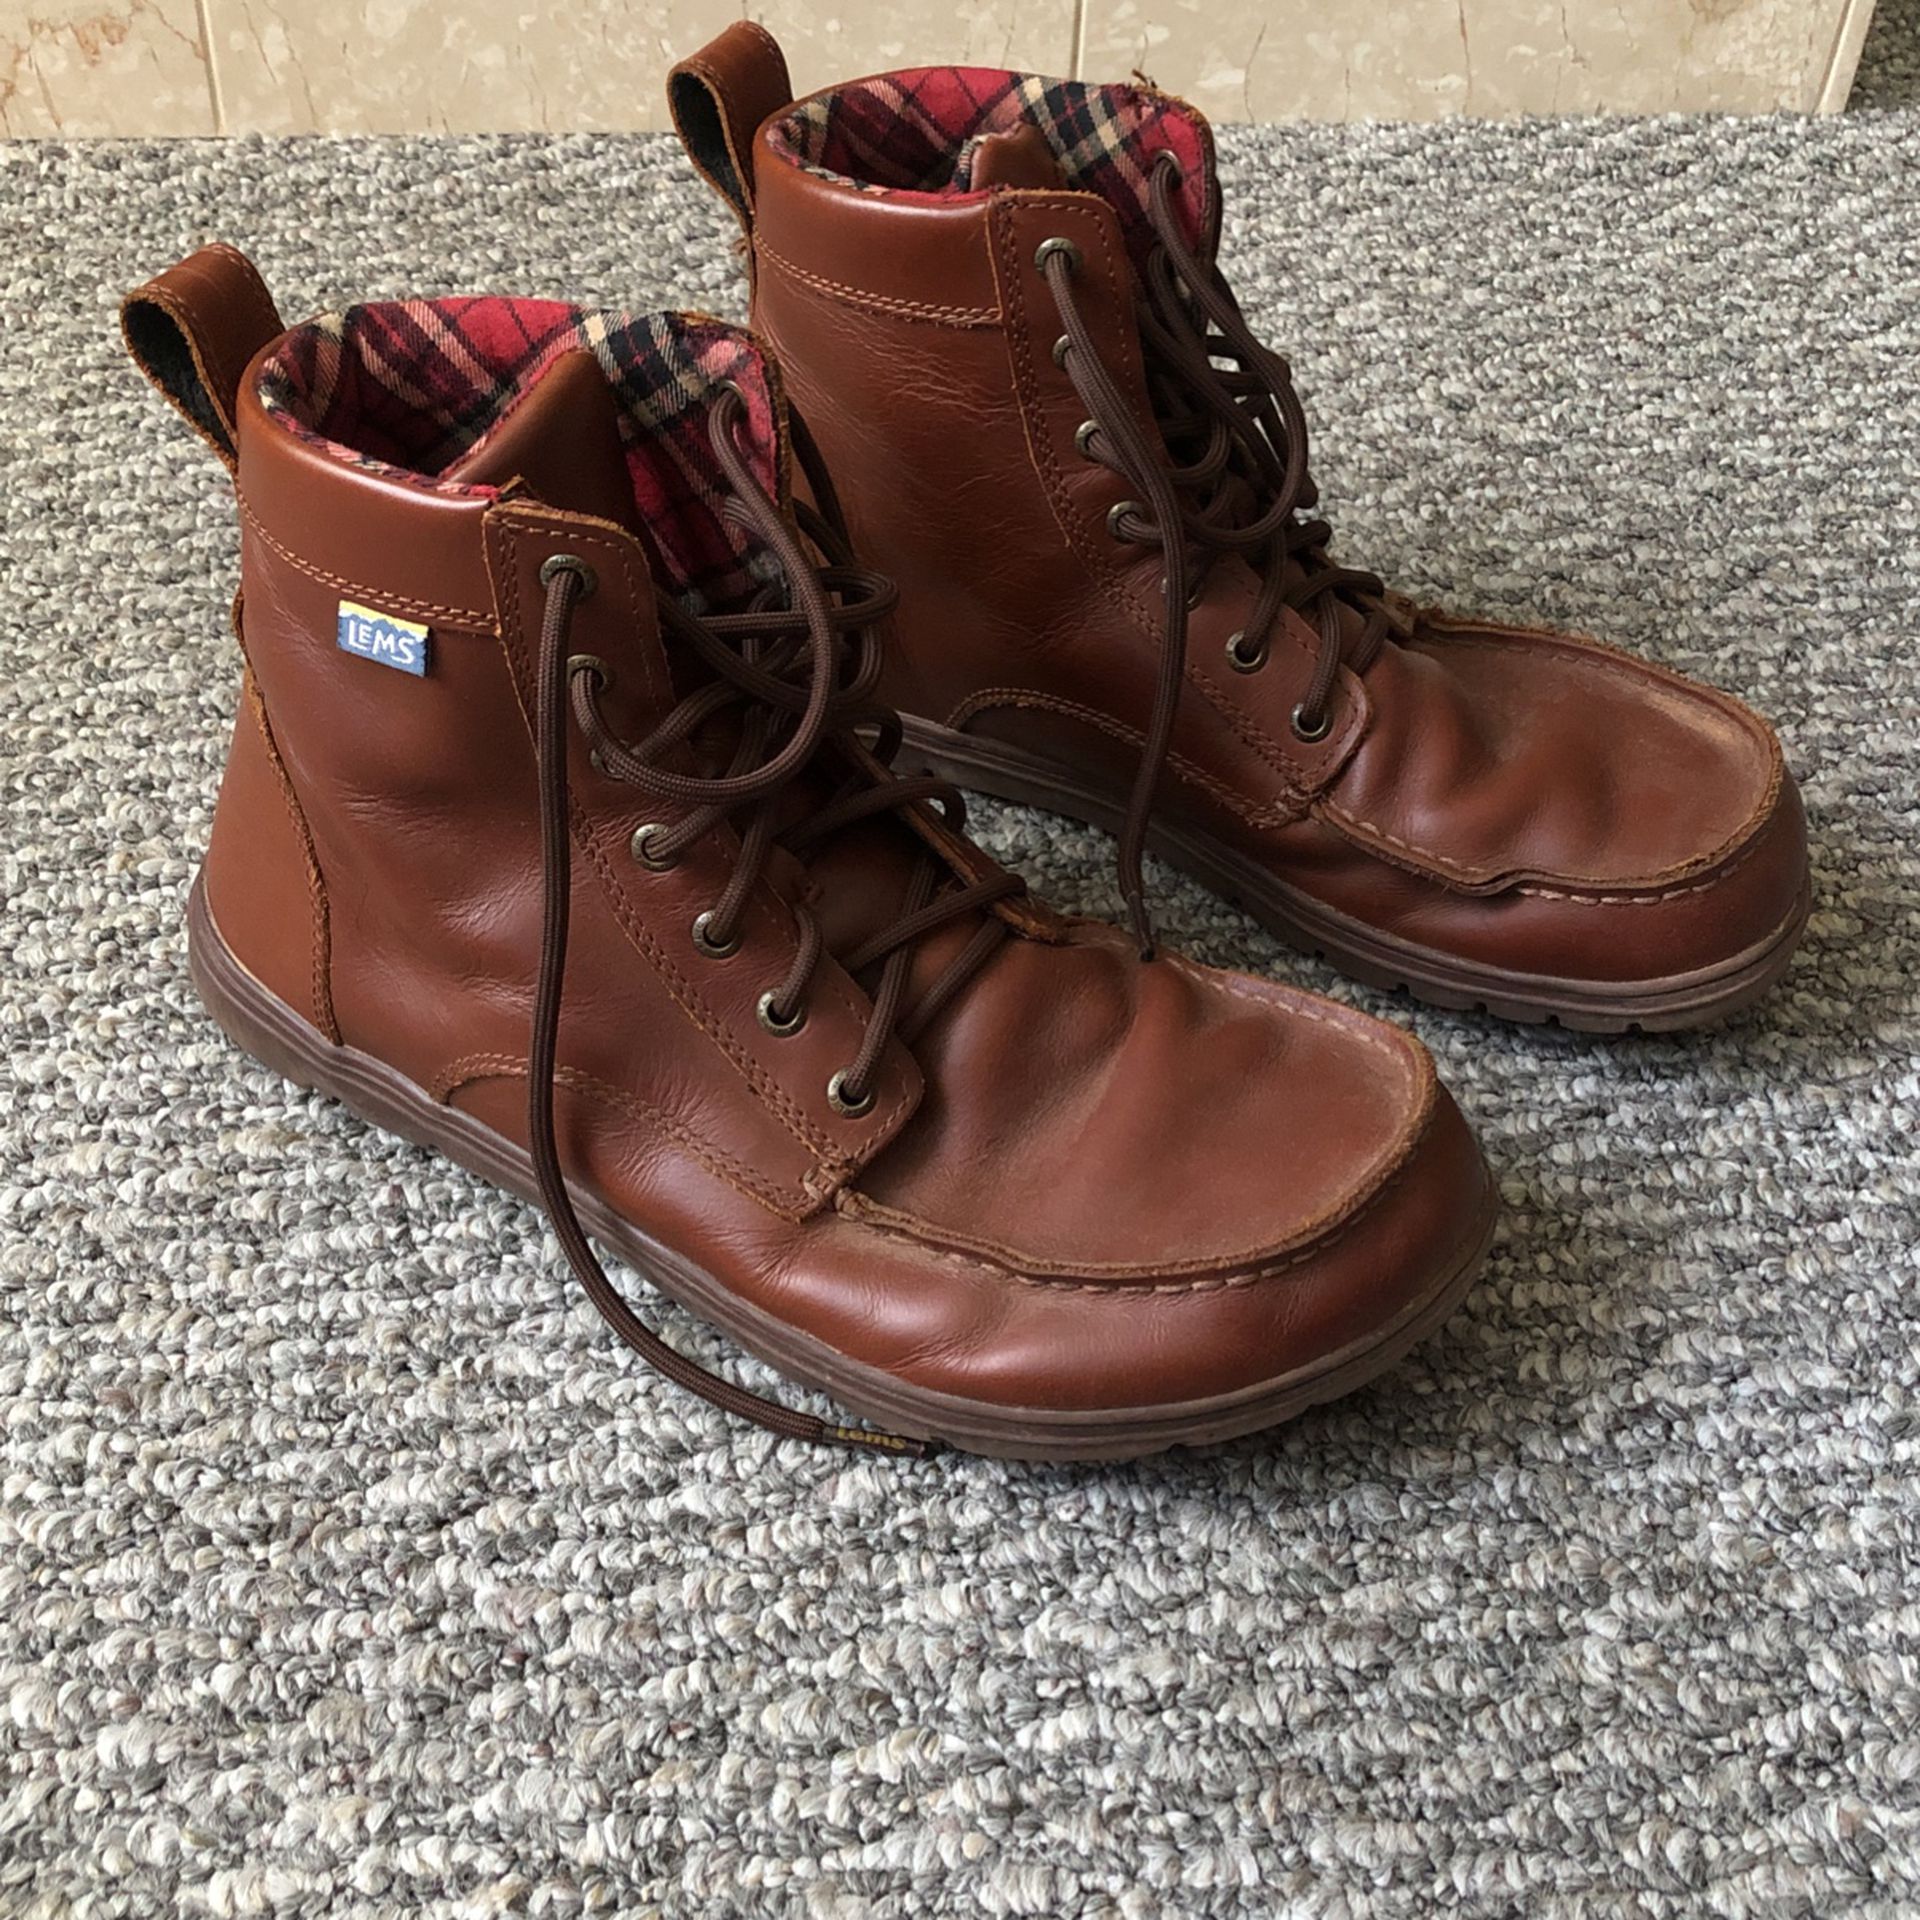 Lems Boulder Boot Size 45